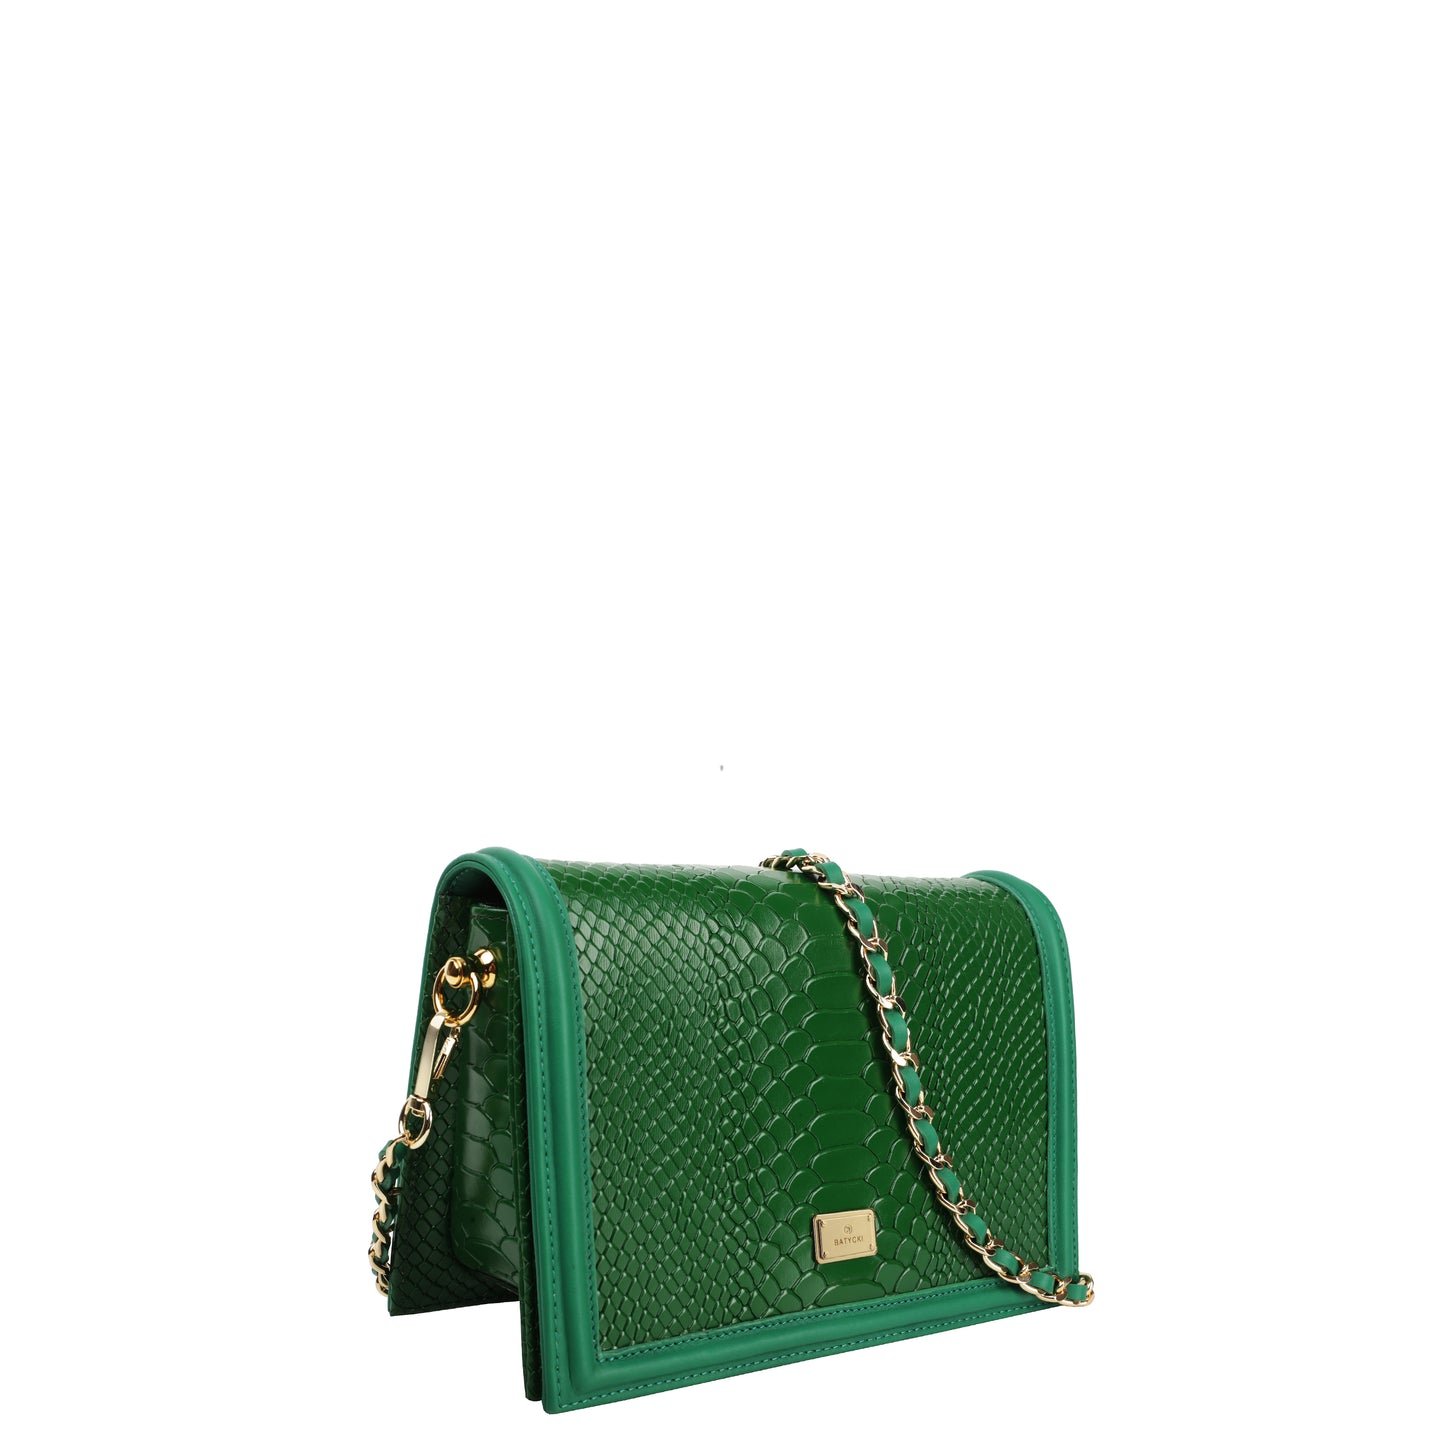 Maya green women's leather handbag